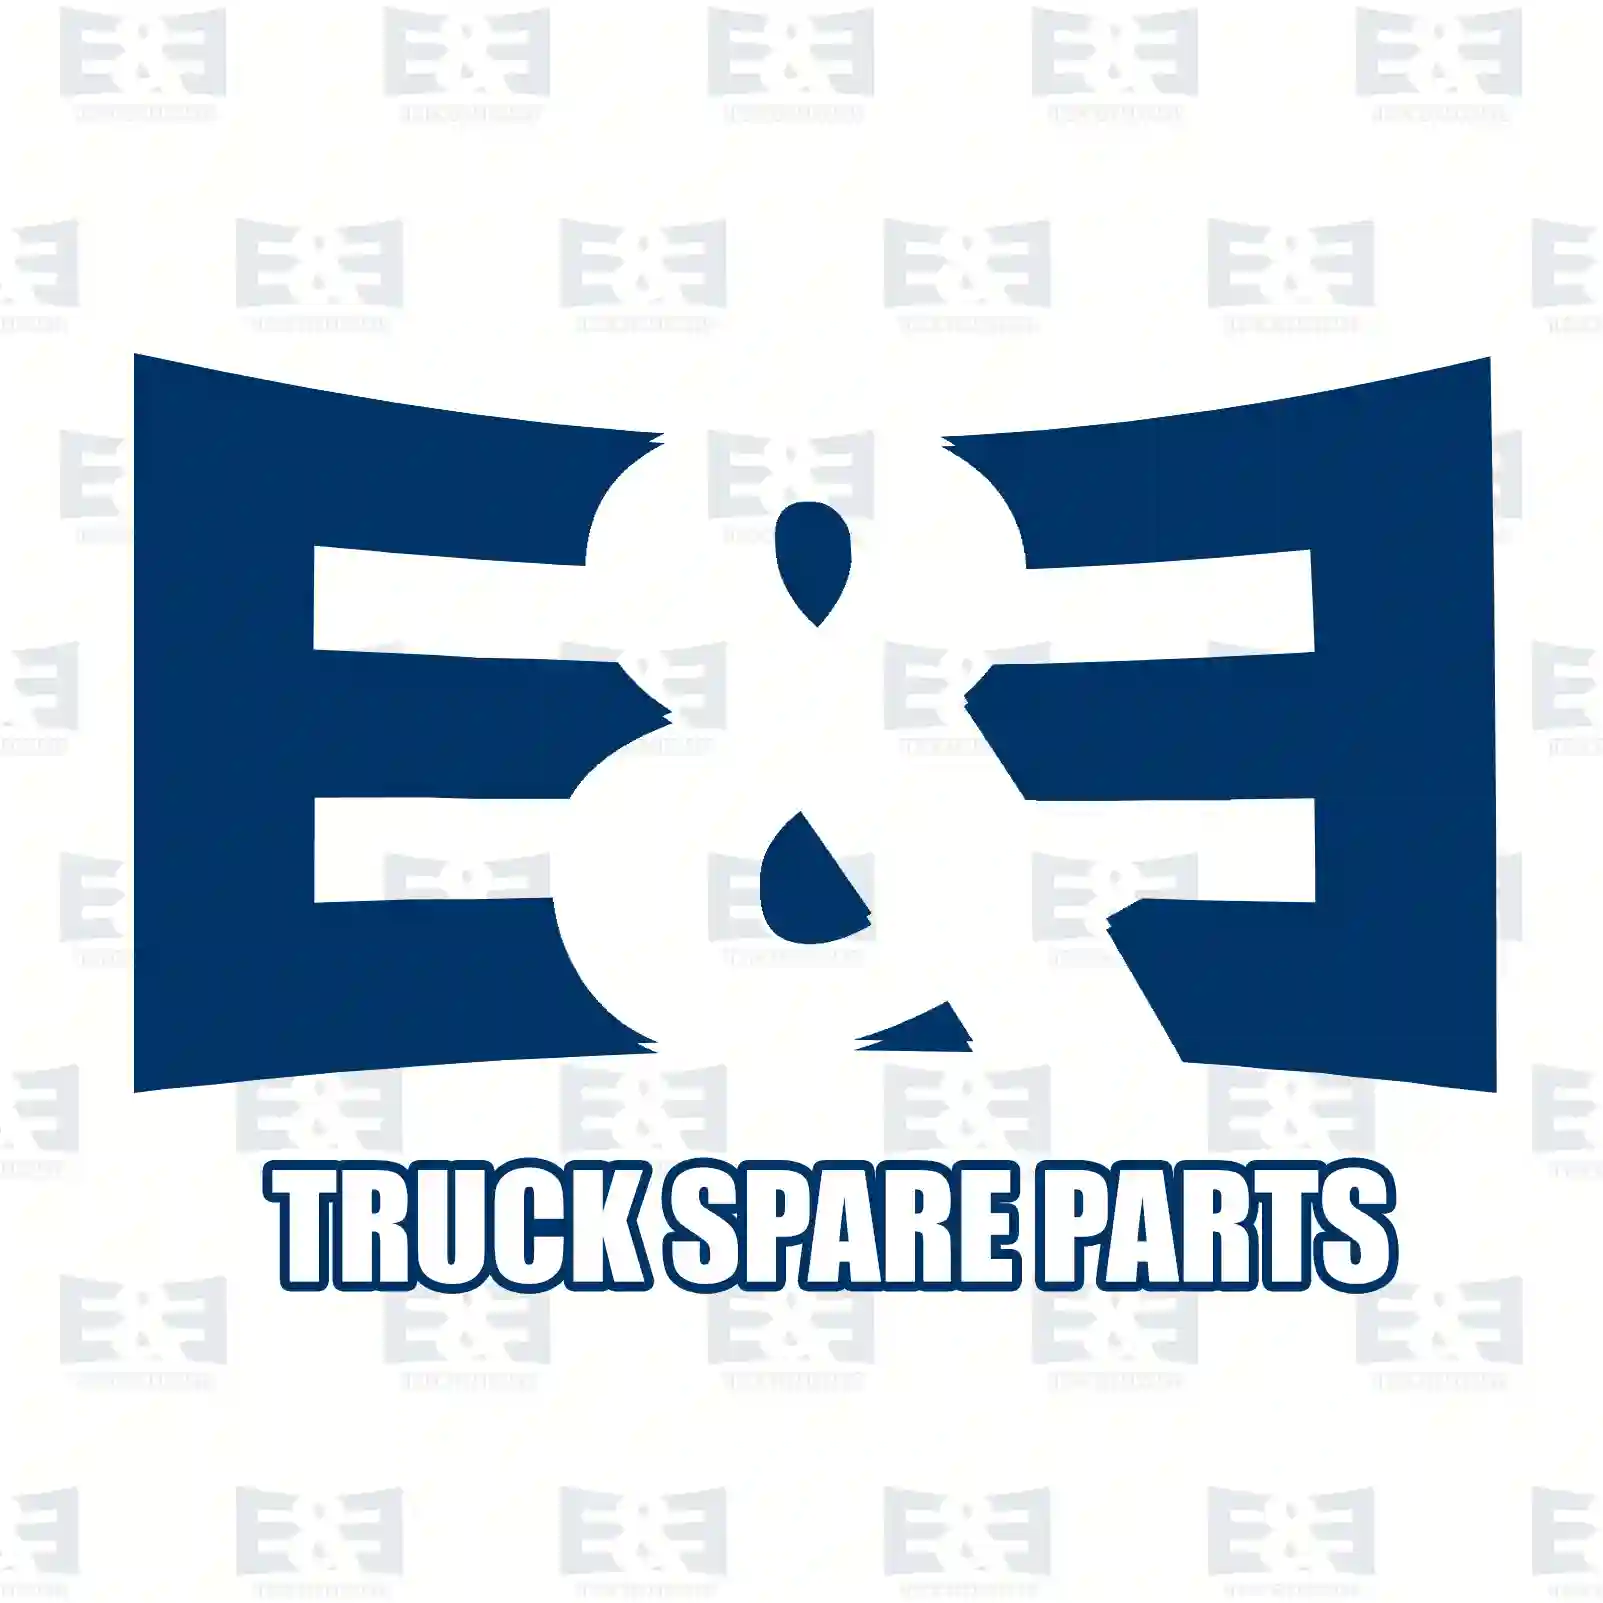 Mirror Main mirror, heated, EE No 2E2292088 ,  oem no:650361, 892896, 7723617, 42209401, 81637306209, 88637306030, 0008102316, 3018102116, 3818102616, 3818107316, 6738100916, 6738104216, 6777971, 6793880 E&E Truck Spare Parts | Truck Spare Parts, Auotomotive Spare Parts